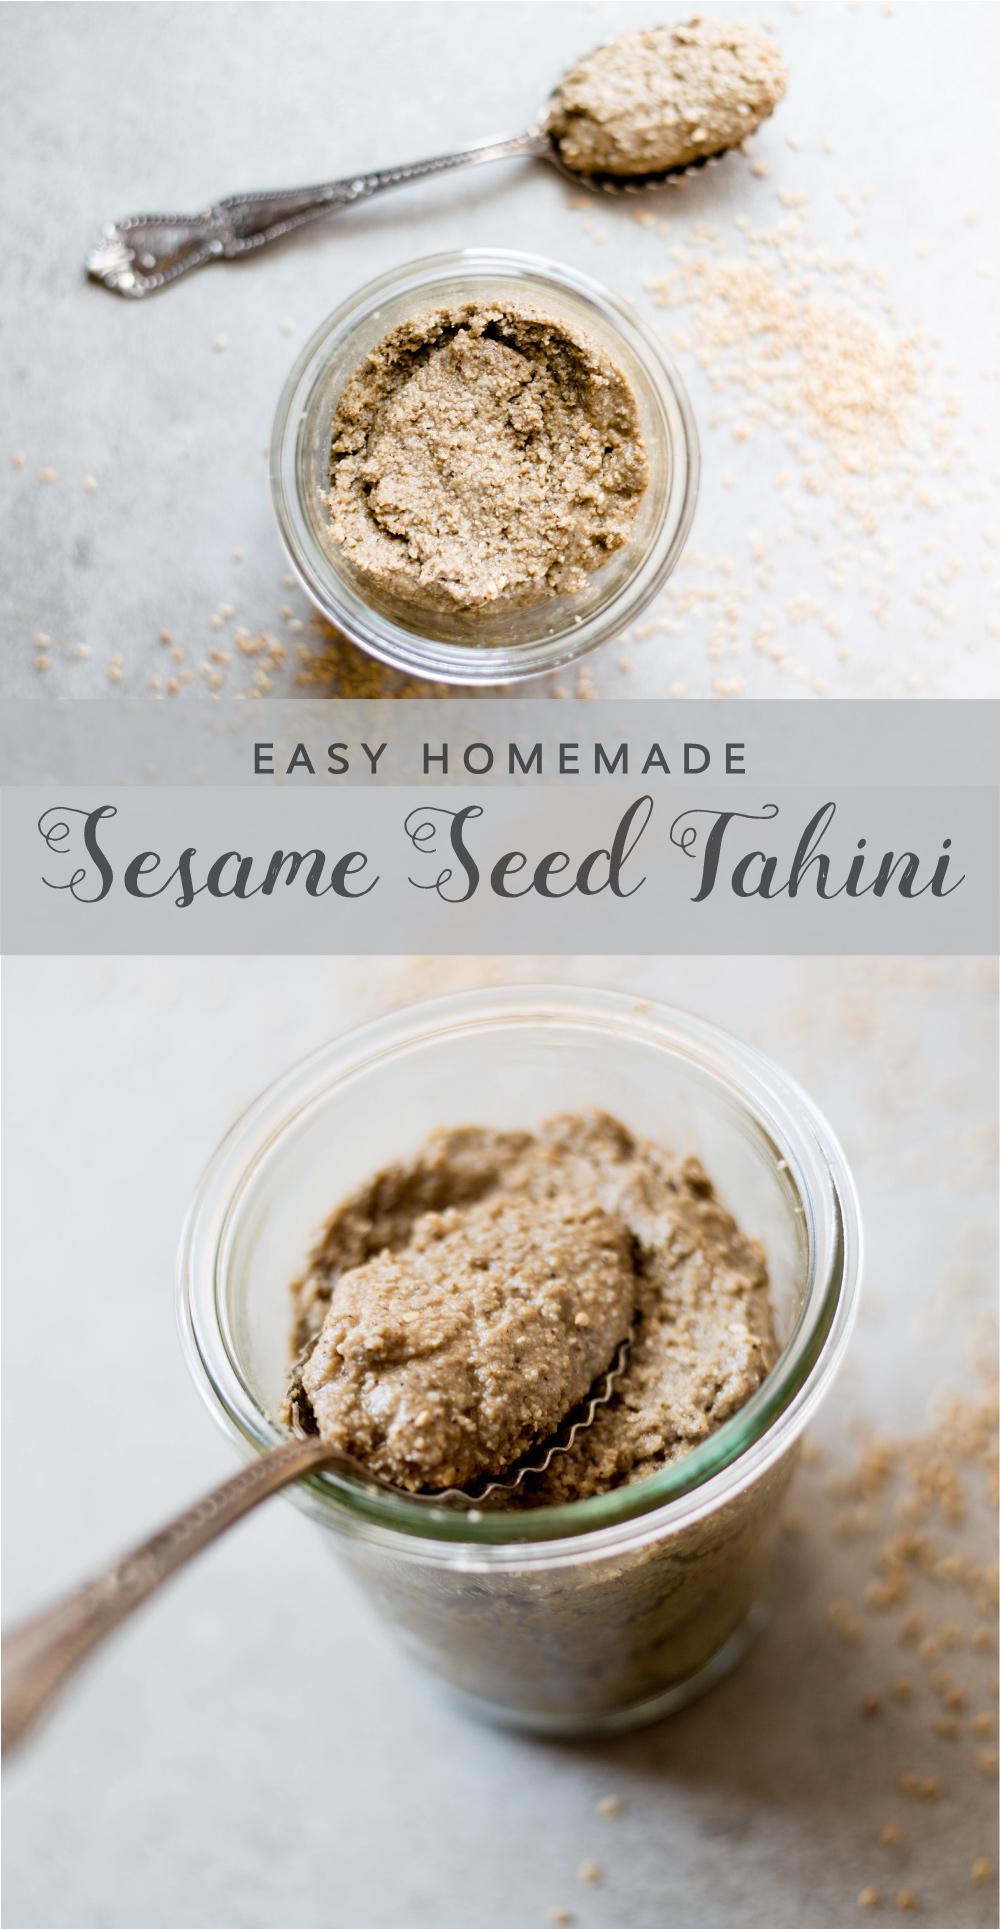 Sesame Seed Tahini Recipe | Homemade | Super healthy, easy & delicious #purekitchenblog #plantbaseddiet